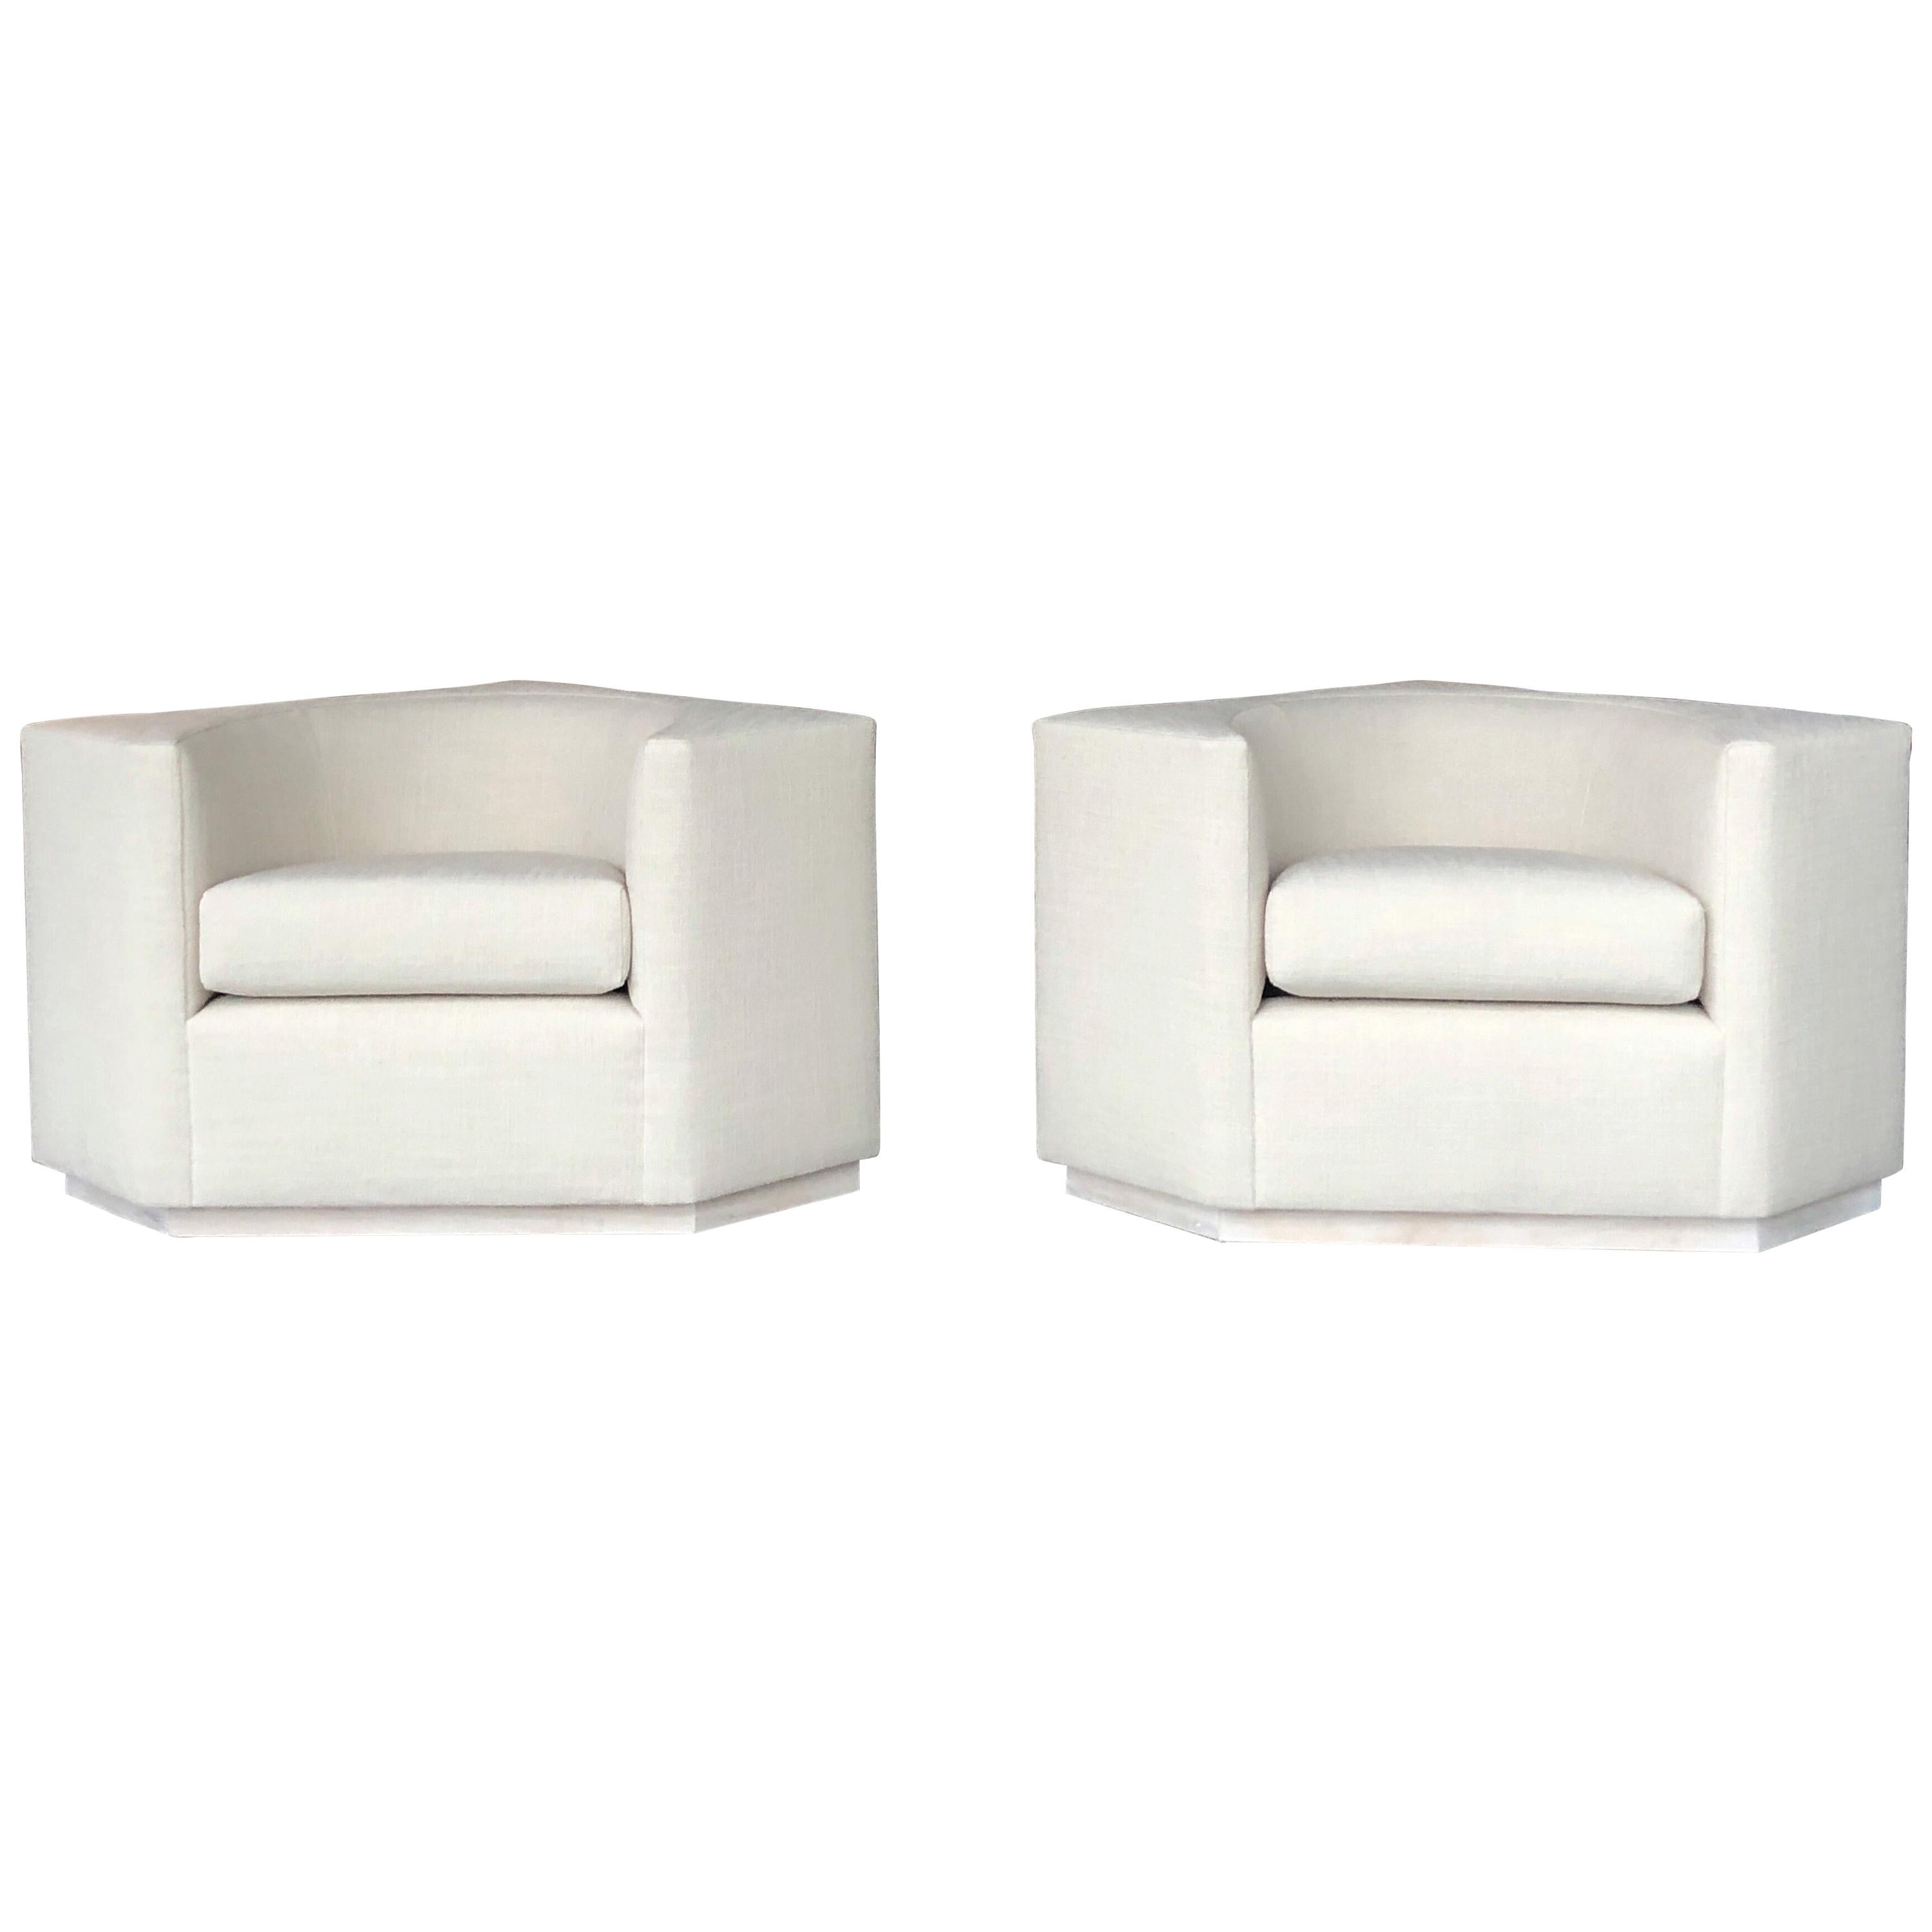 Pair of Cube Geometric Lounge Club Chairs